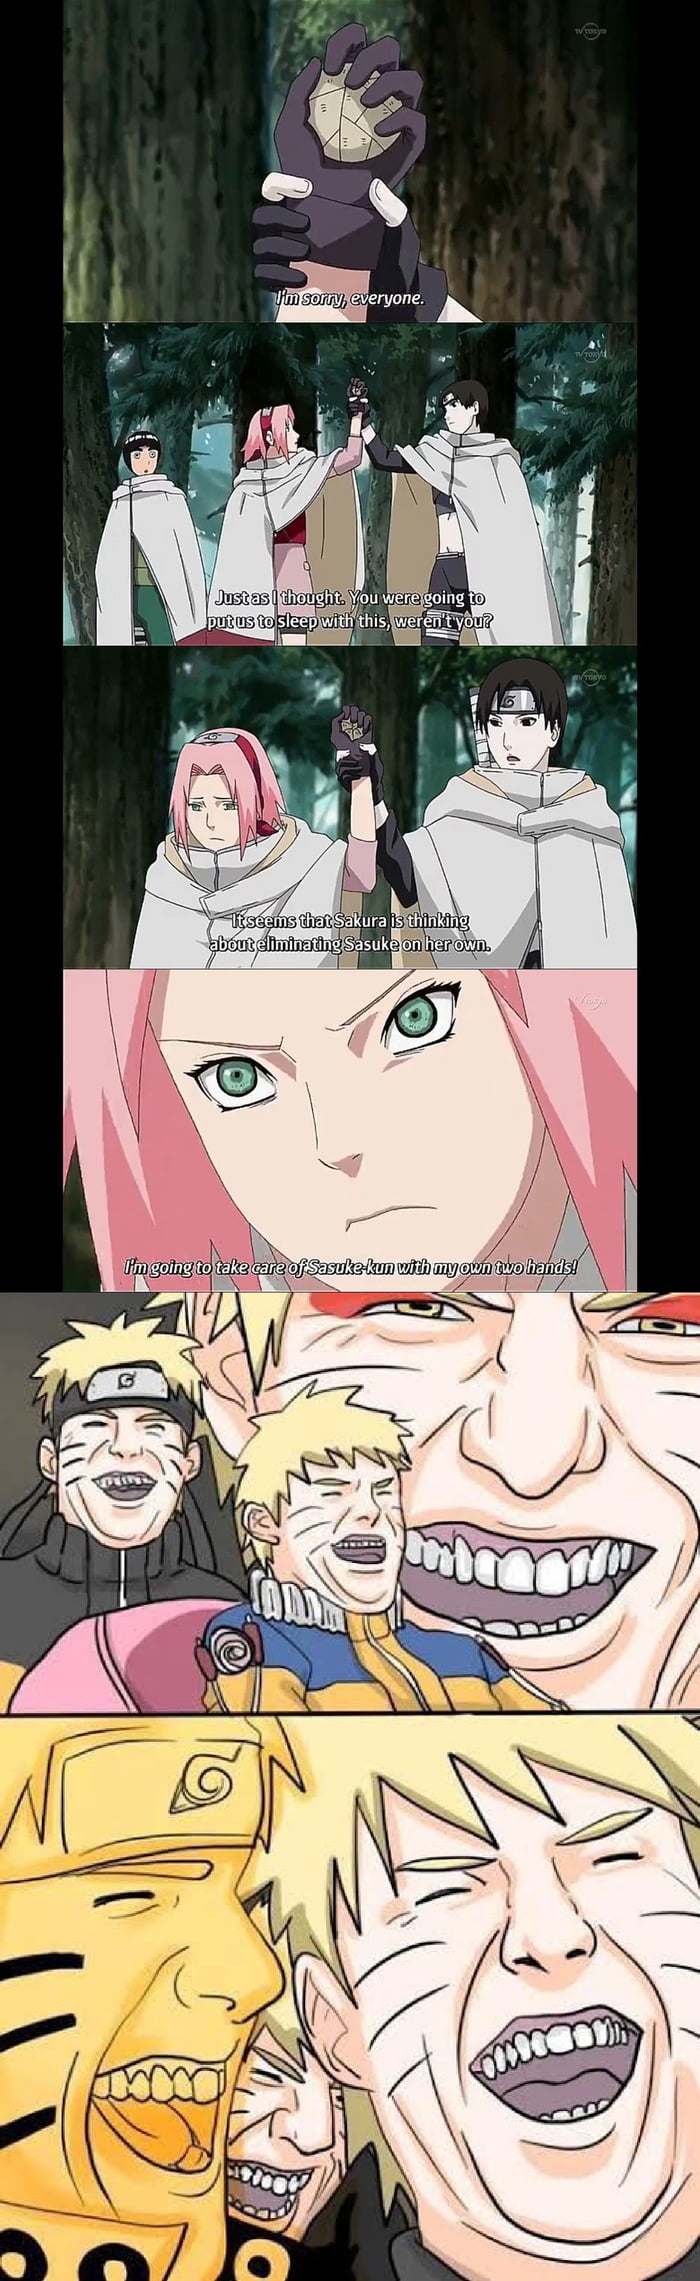 Very funny Sakura